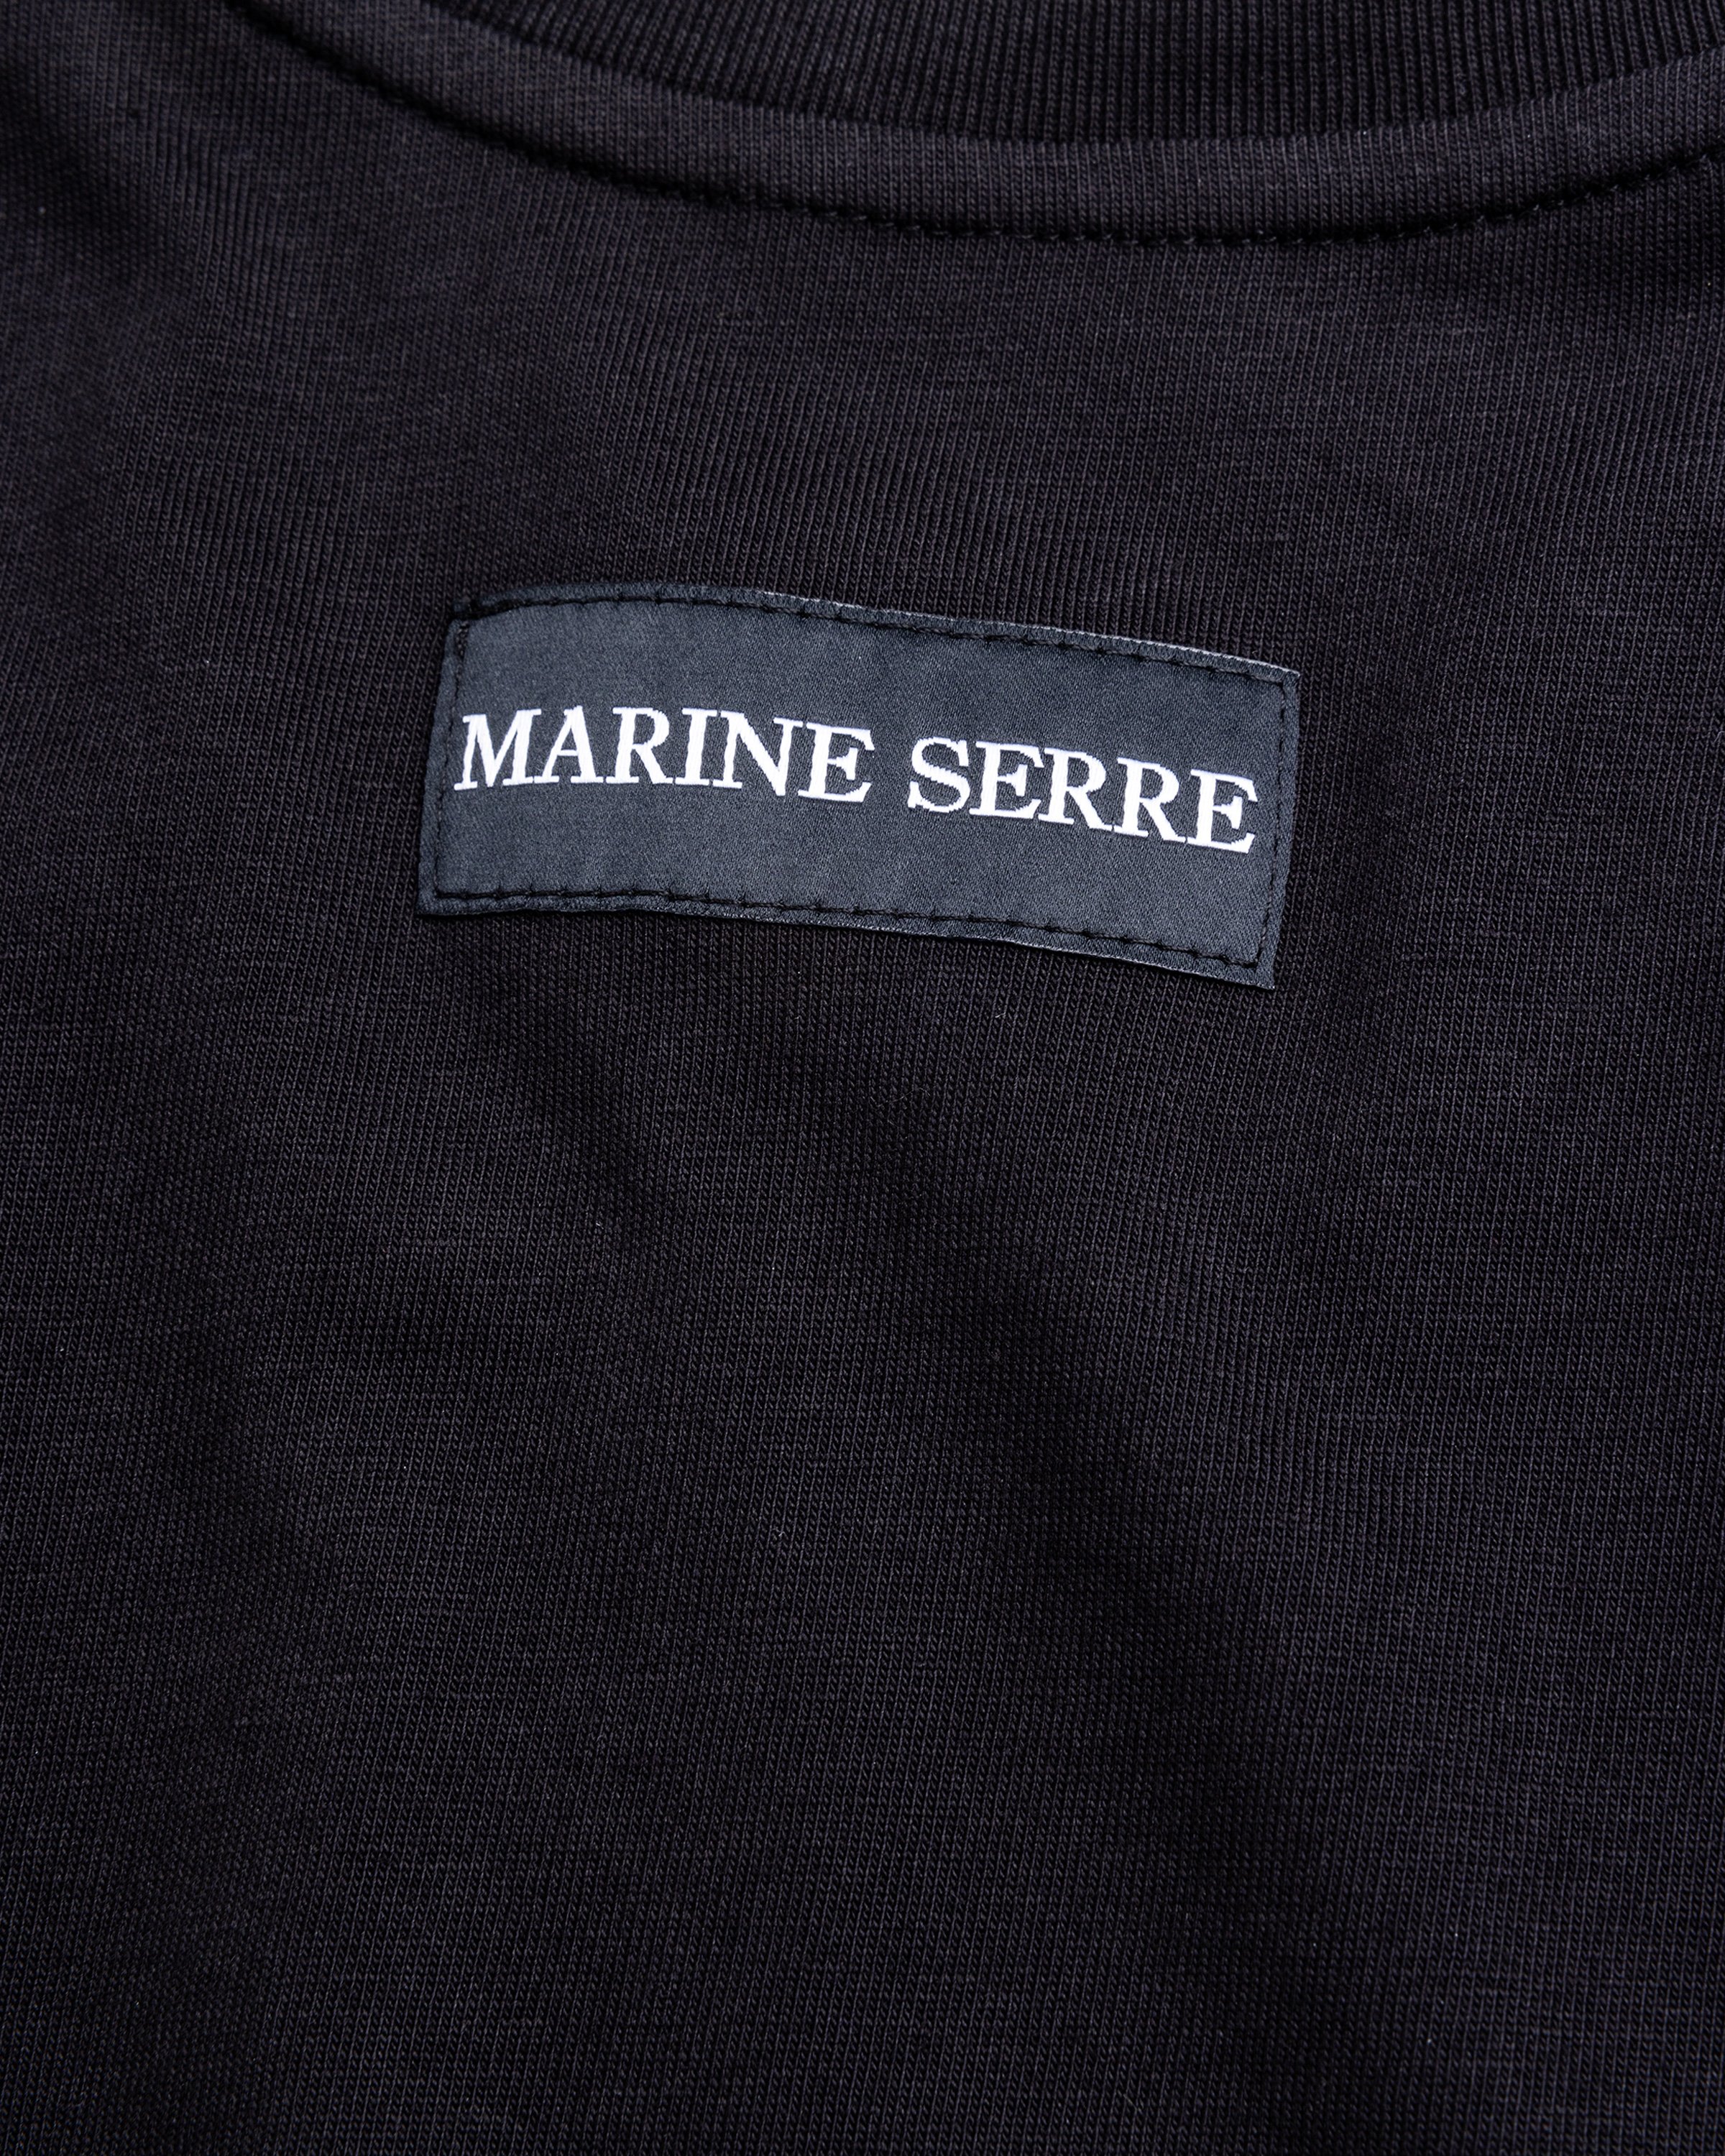 Marine Serre - ORGANIC COTTON JERSEY PLAIN TANK TOP BK99 BLACK - Clothing - Black - Image 7